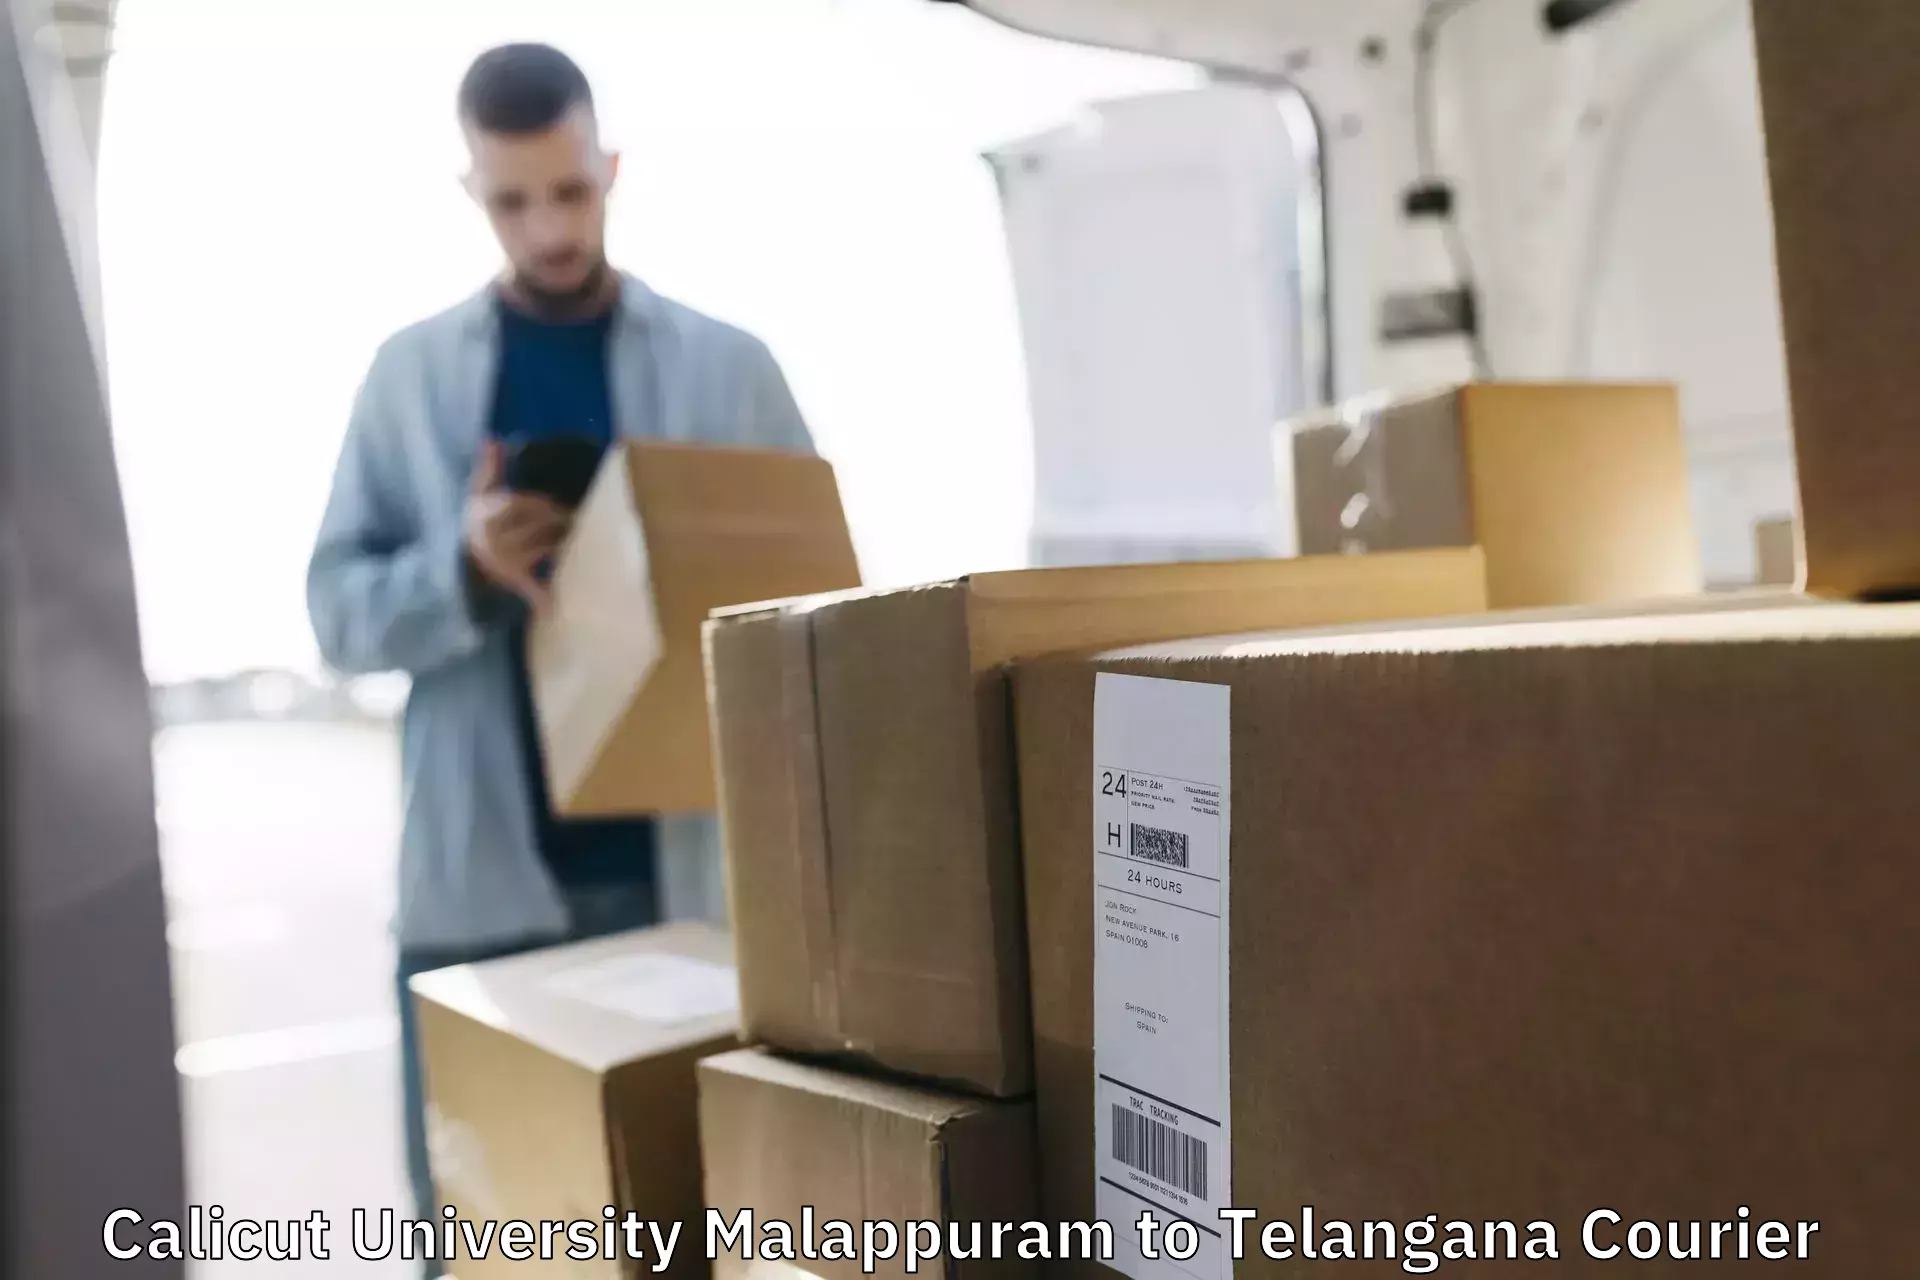 Customer-friendly courier services Calicut University Malappuram to Nellikuduru